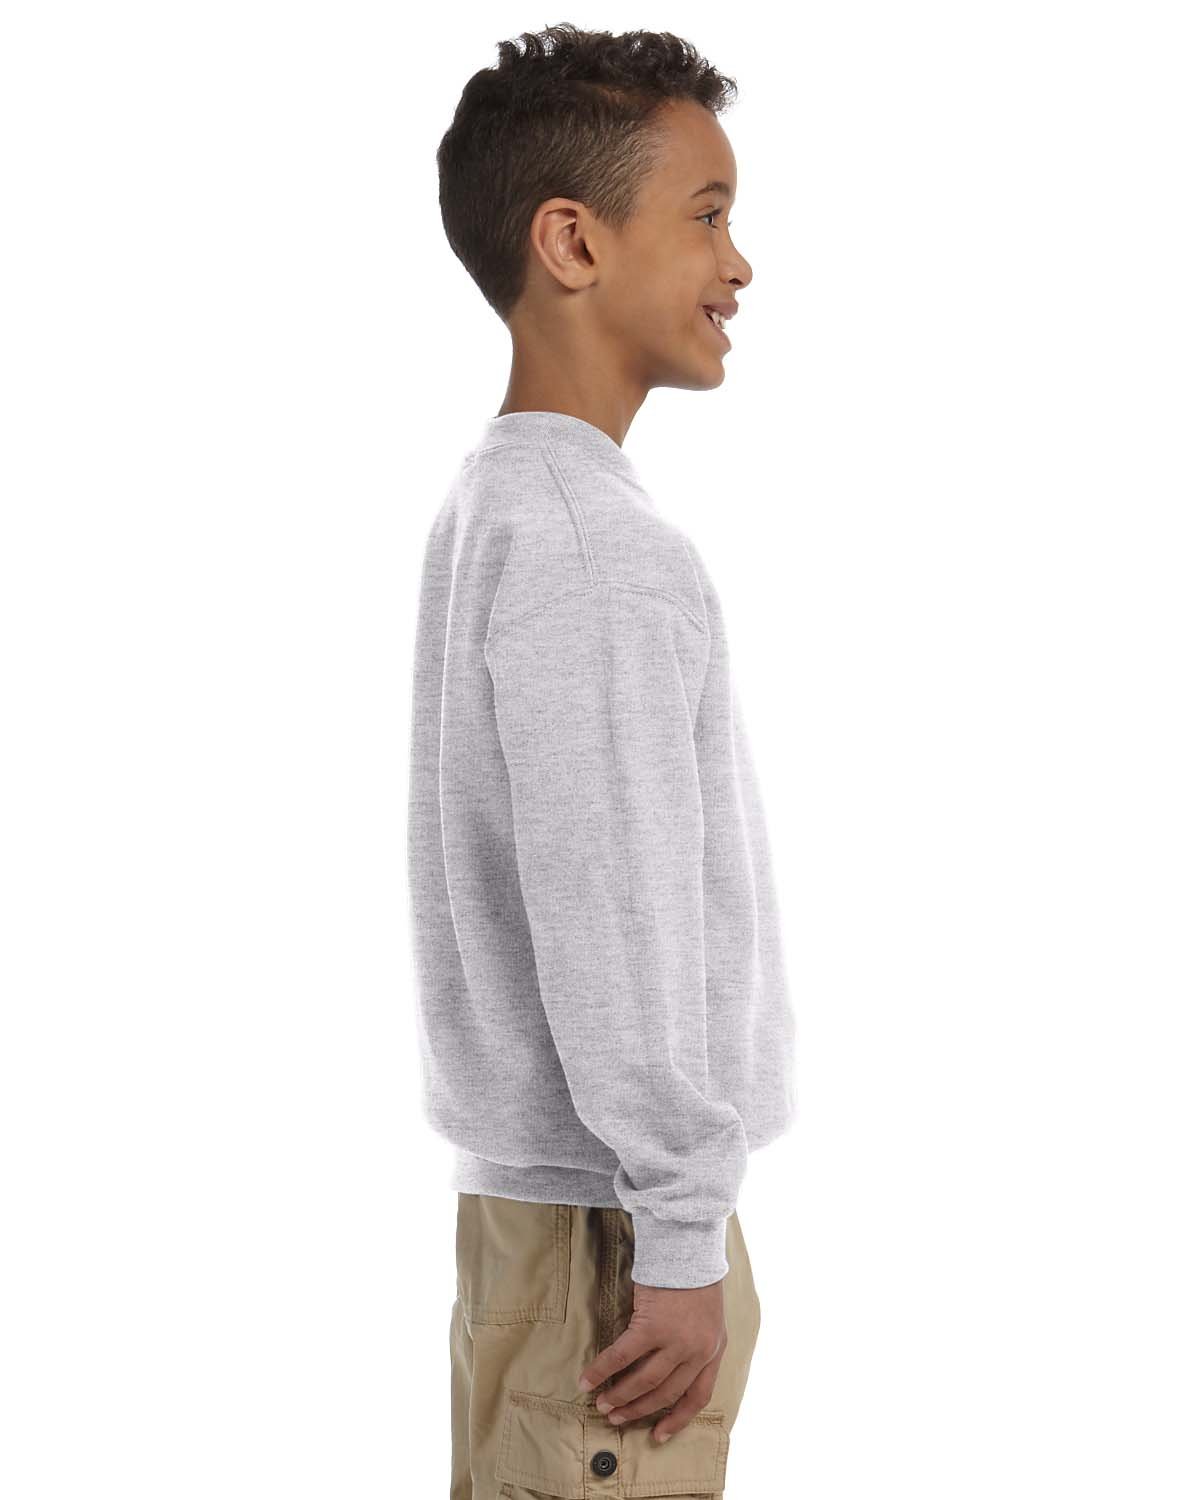 Gildan Heavy Blend Youth Crewneck Sweatshirt, Sport Grey, X-Small